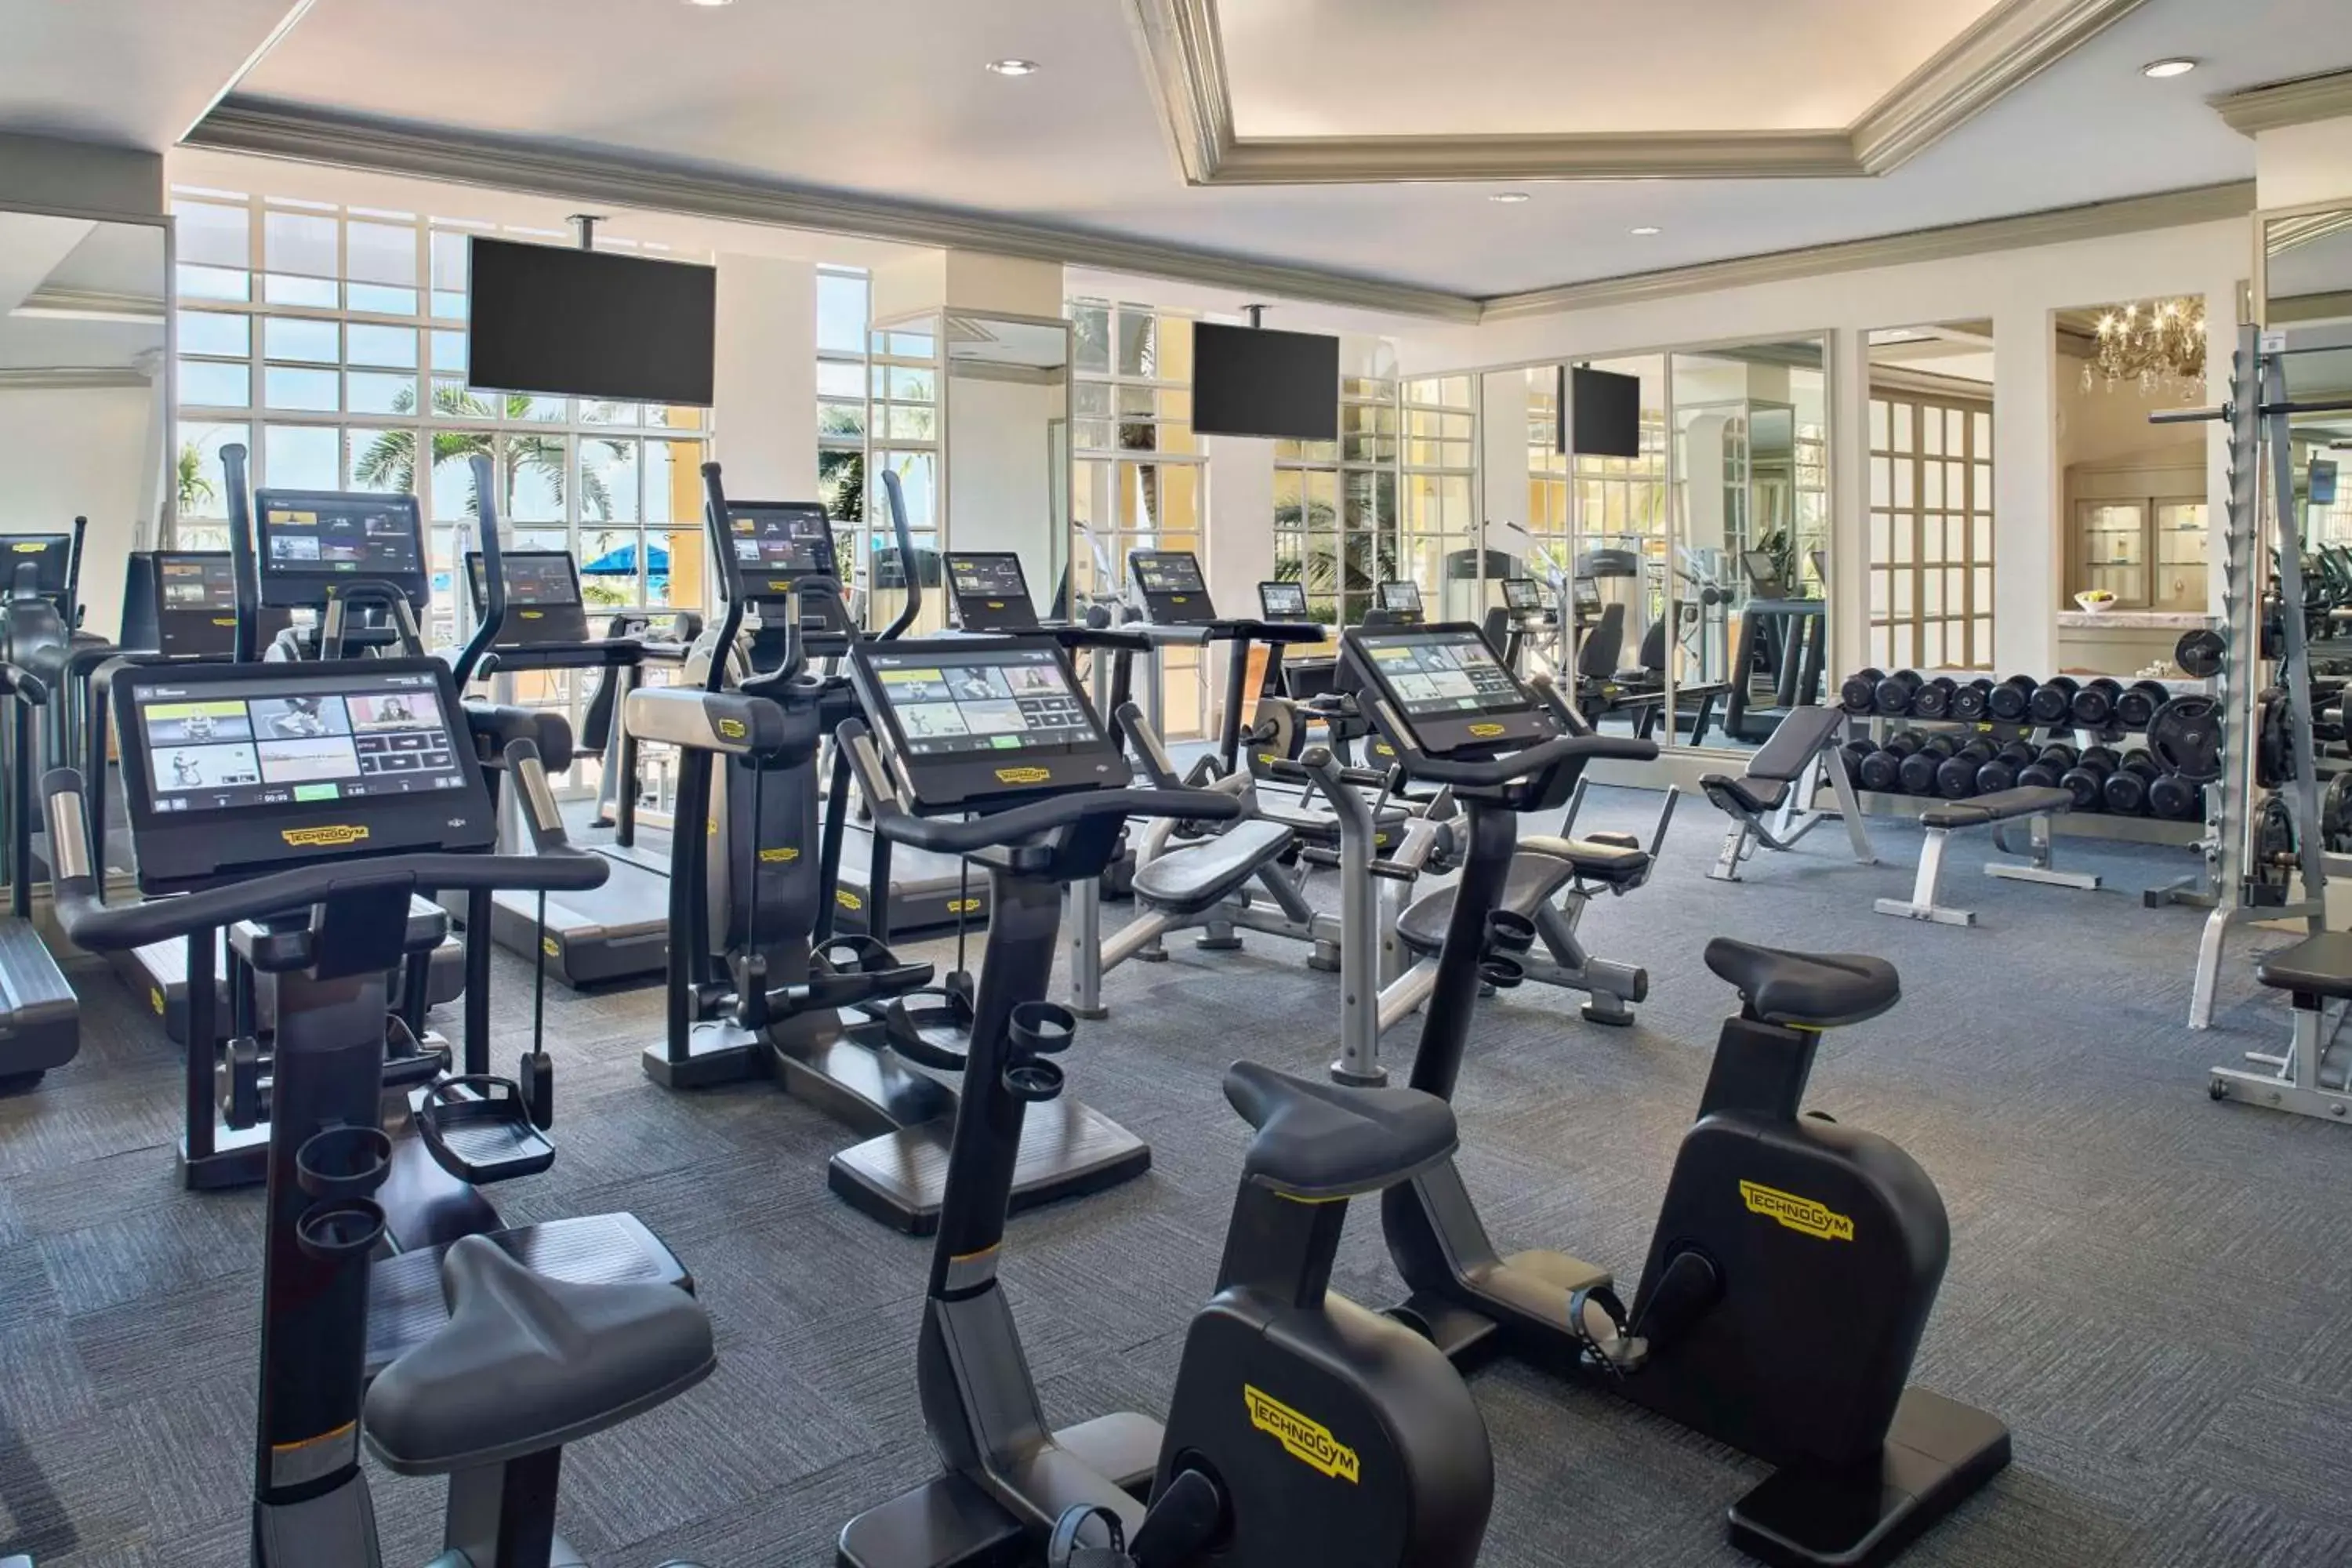 Fitness centre/facilities, Fitness Center/Facilities in Kempinski Hotel Cancun